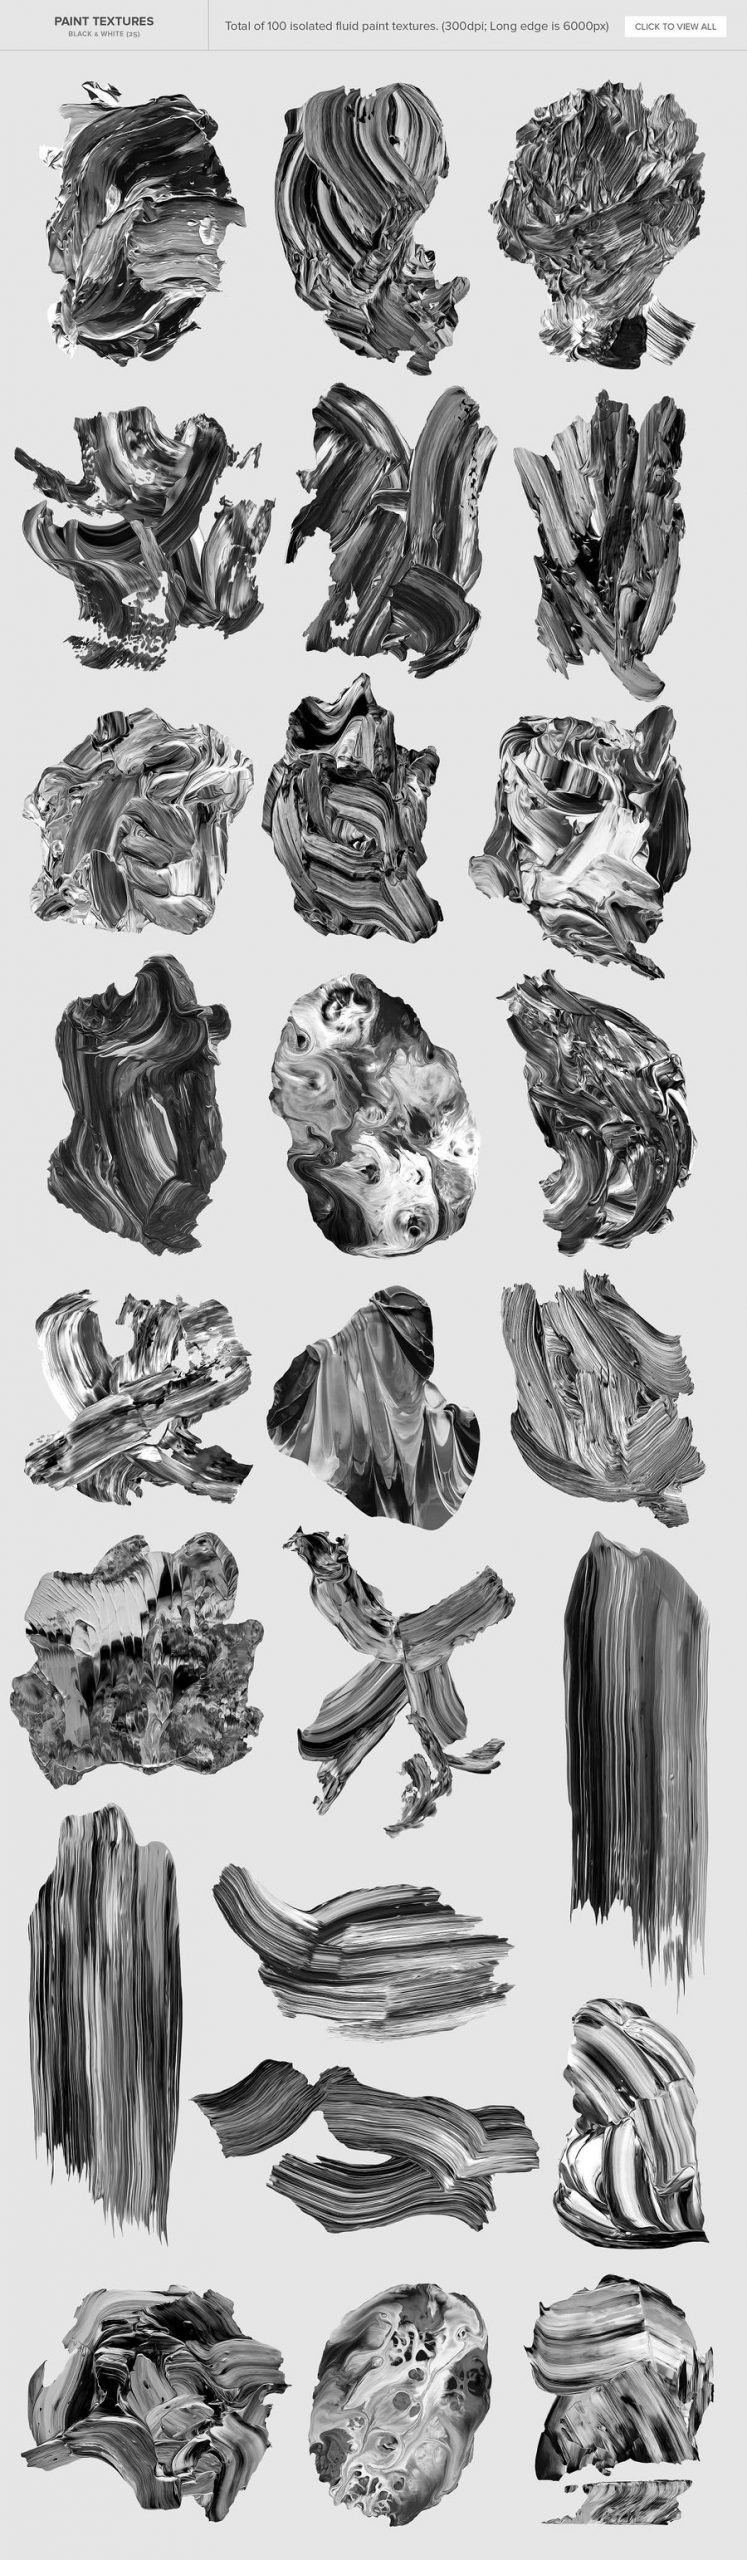 PNG素材-抽象缤纷油画颜料混色肌理效果PNG素材及PS笔刷 图片素材 第8张